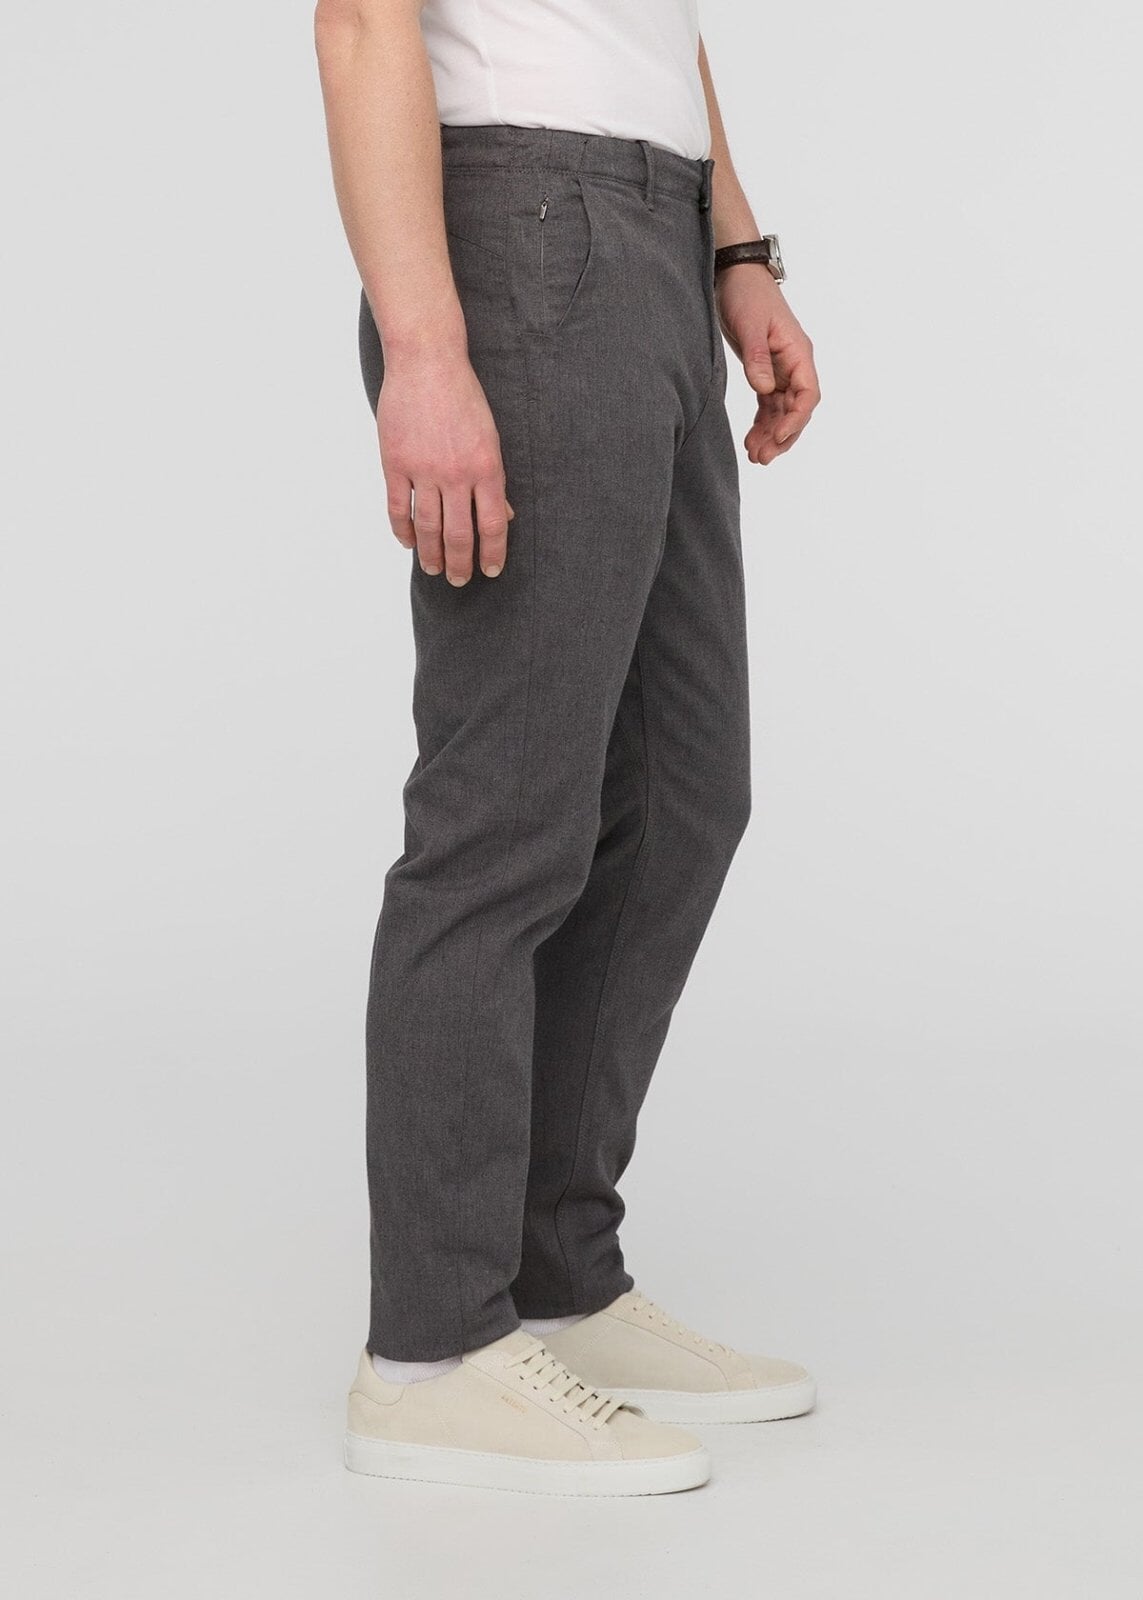 Buy Urban Trousers Online | Casual Trousers for Men | Kultprit | KULTPRIT